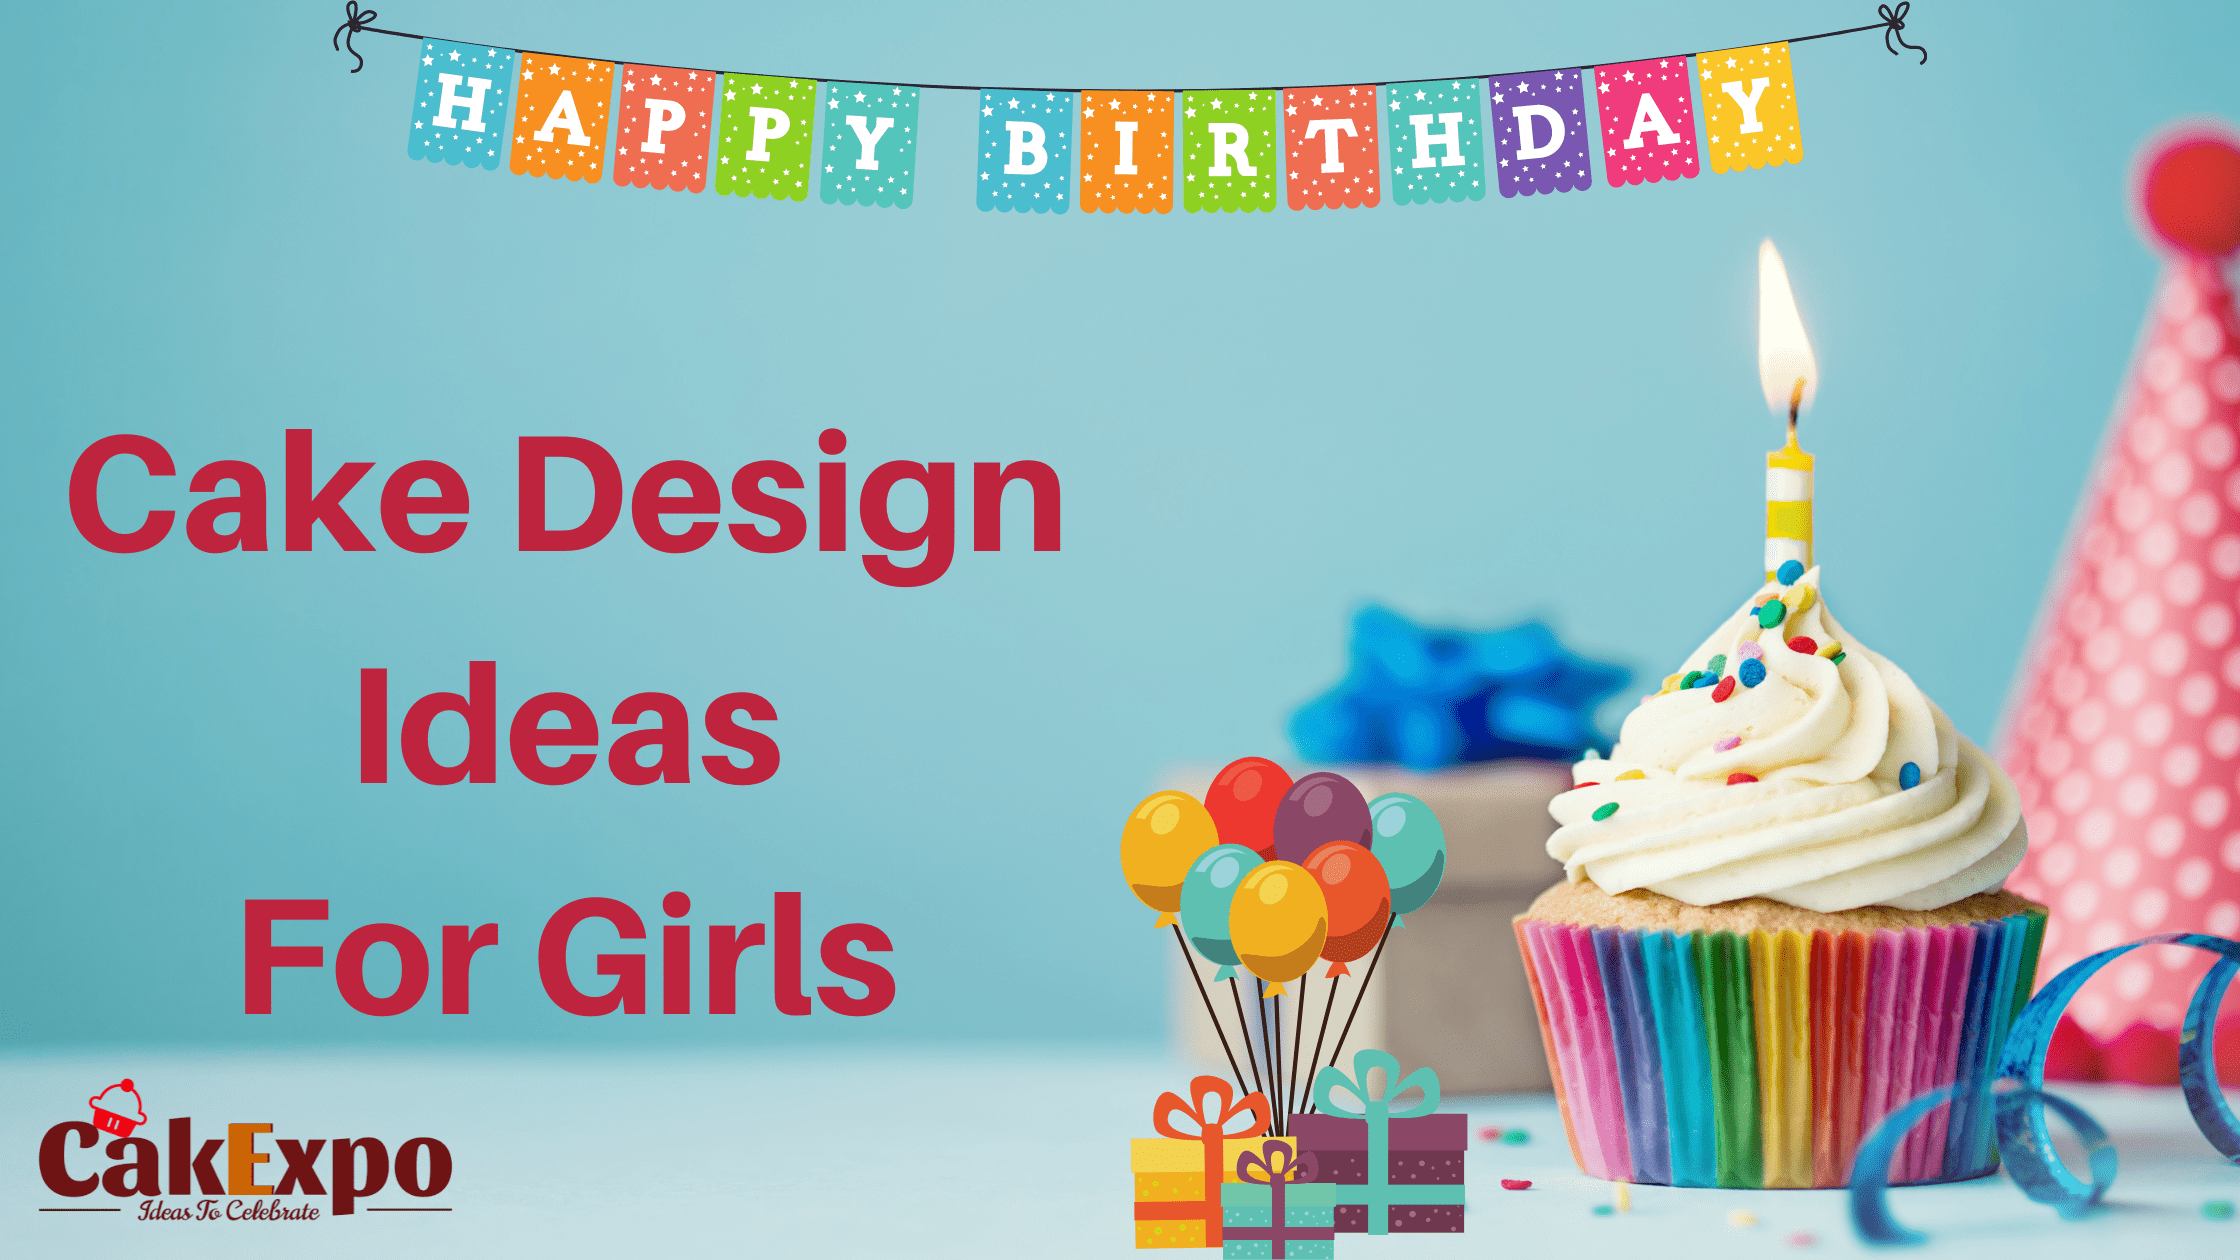 Birthday Cake for Girls is the Secret Ingredient for Girls?